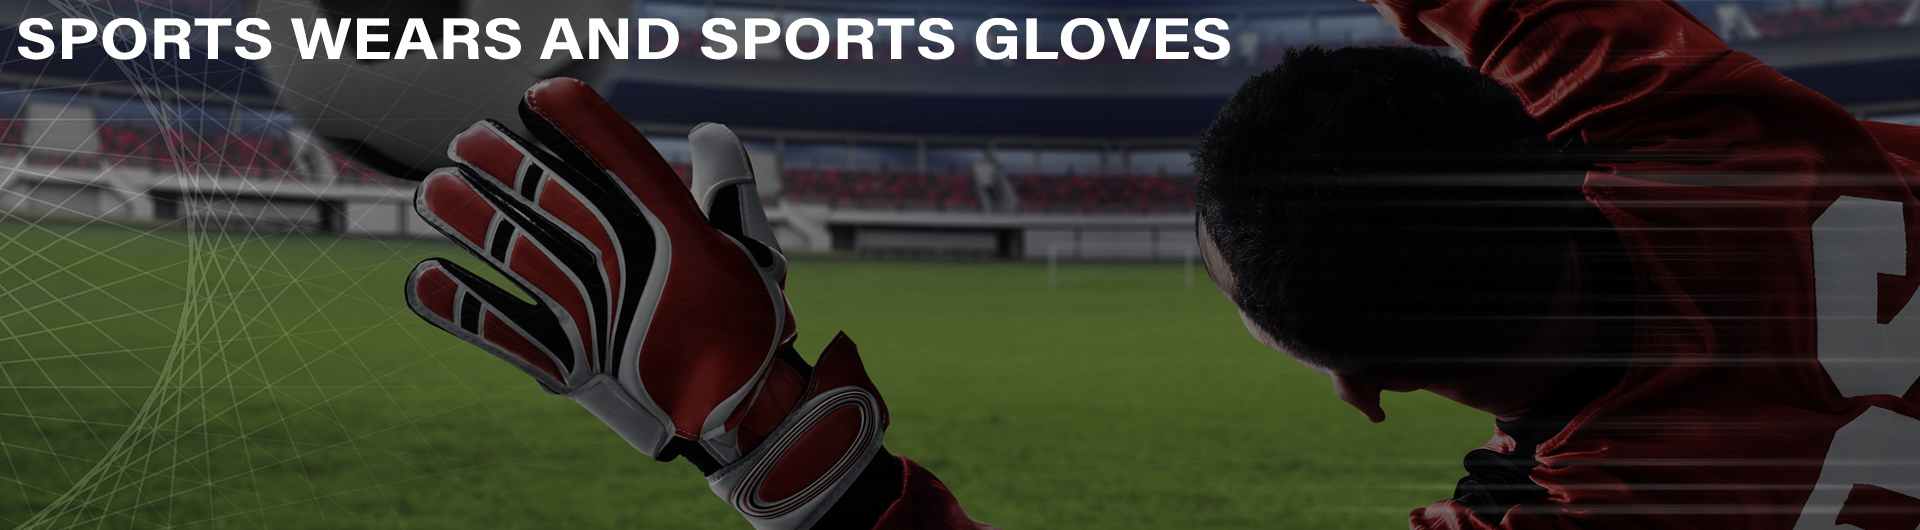 Sportswear & Sports Gloves Banner